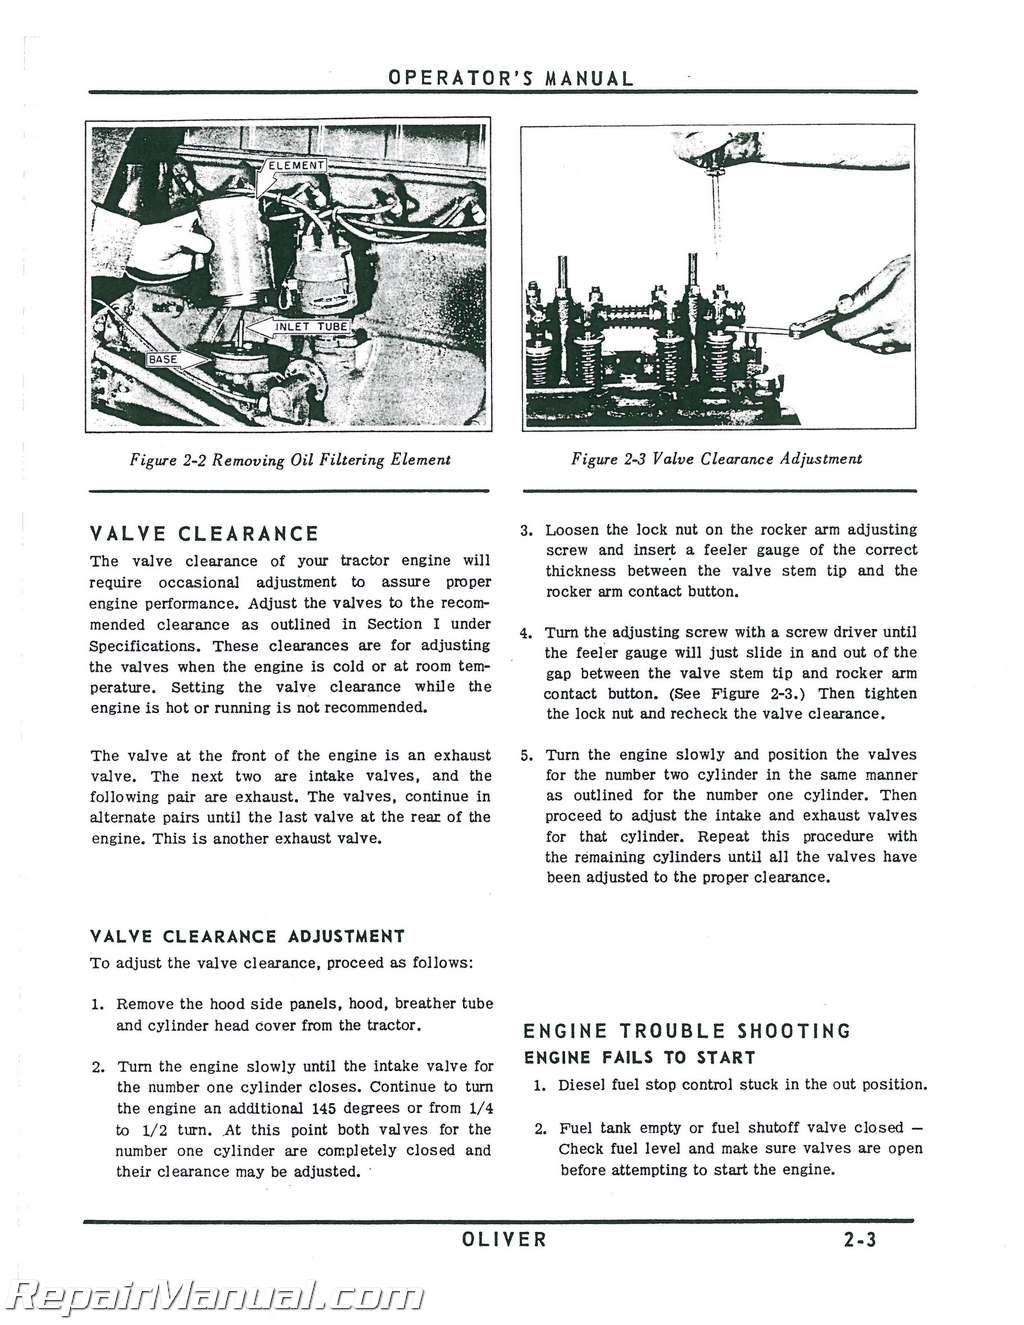 Oliver Model 770 And 880 Operators Manual